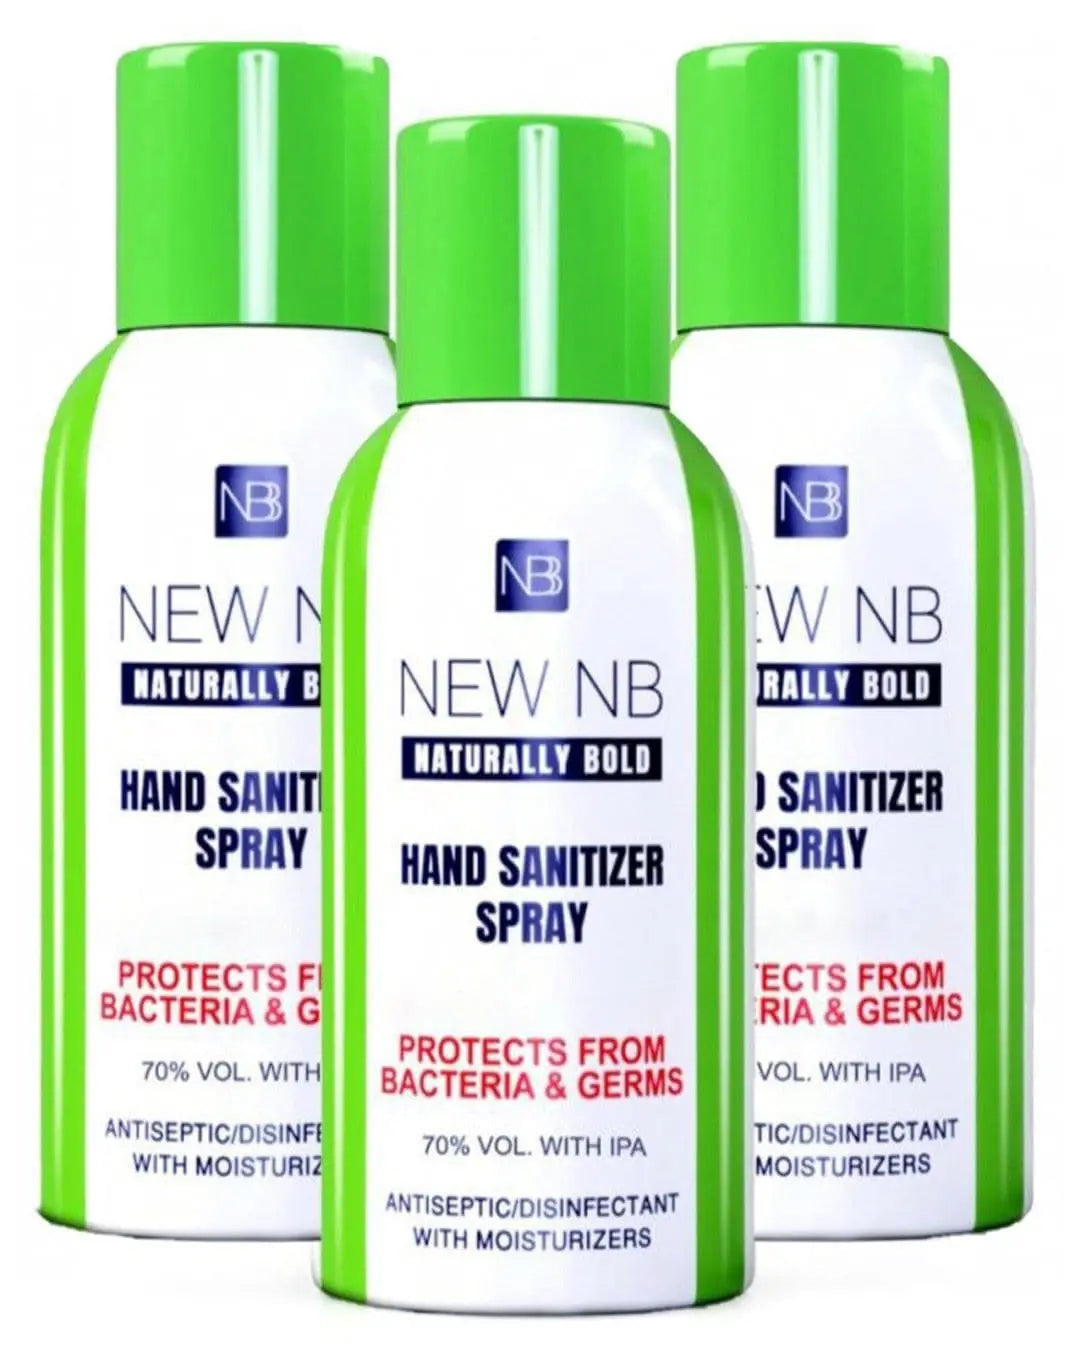 New NB Naturally Bold Hand Sanitiser Spray (70% Alc.) Multipack, 3 x 120 ml Hand Sanitizers